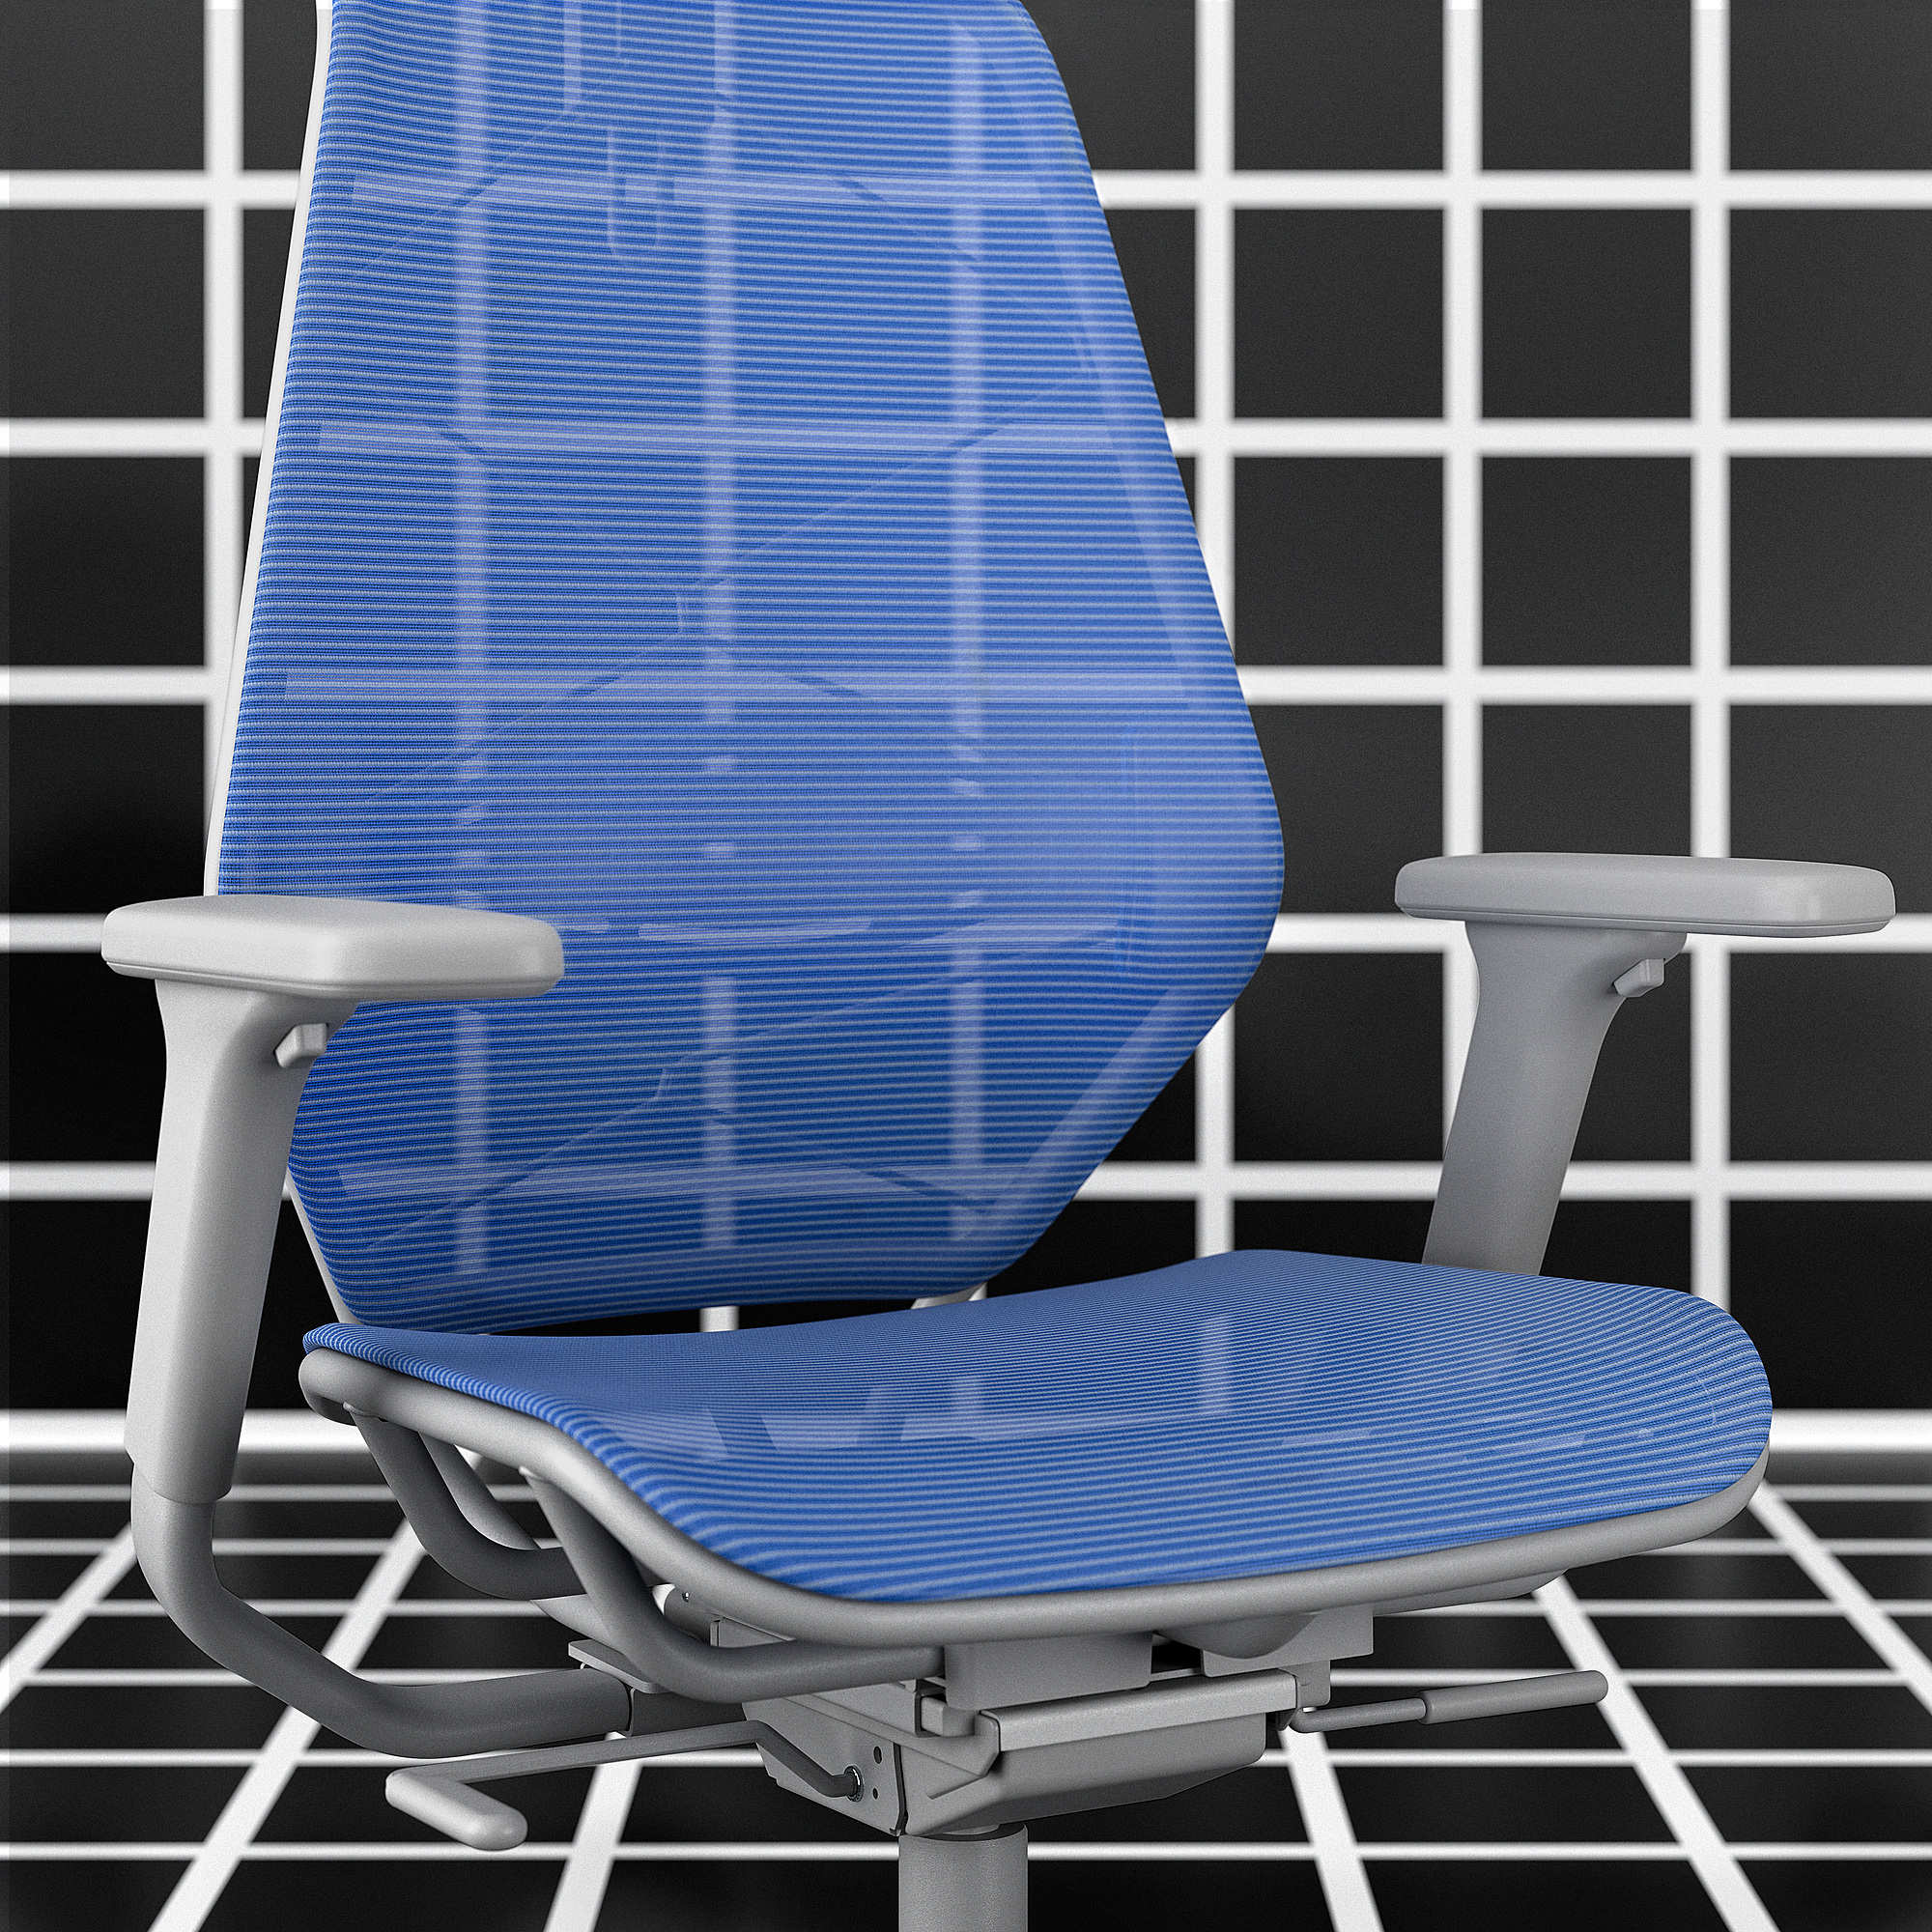 STYRSPEL gaming chair